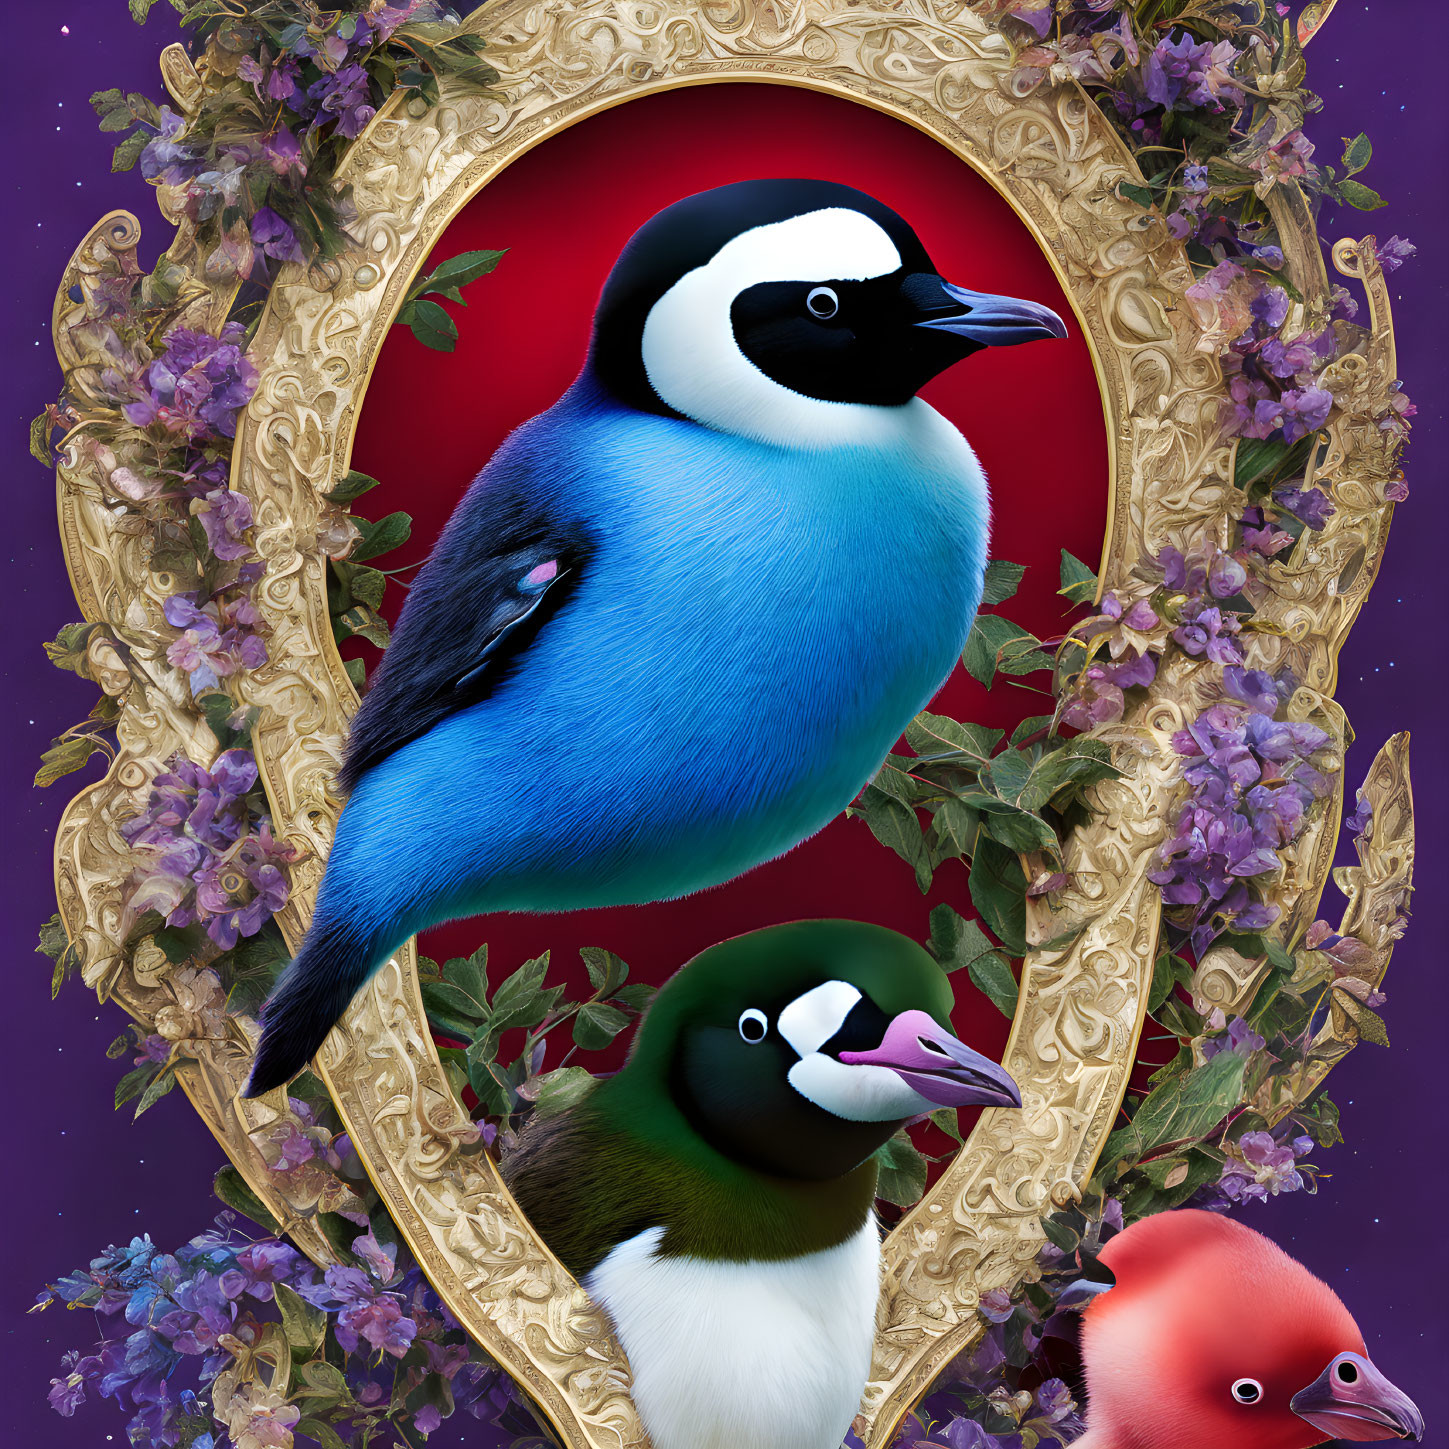 Colorful Birds Illustration in Decorative Golden Frame on Purple Background